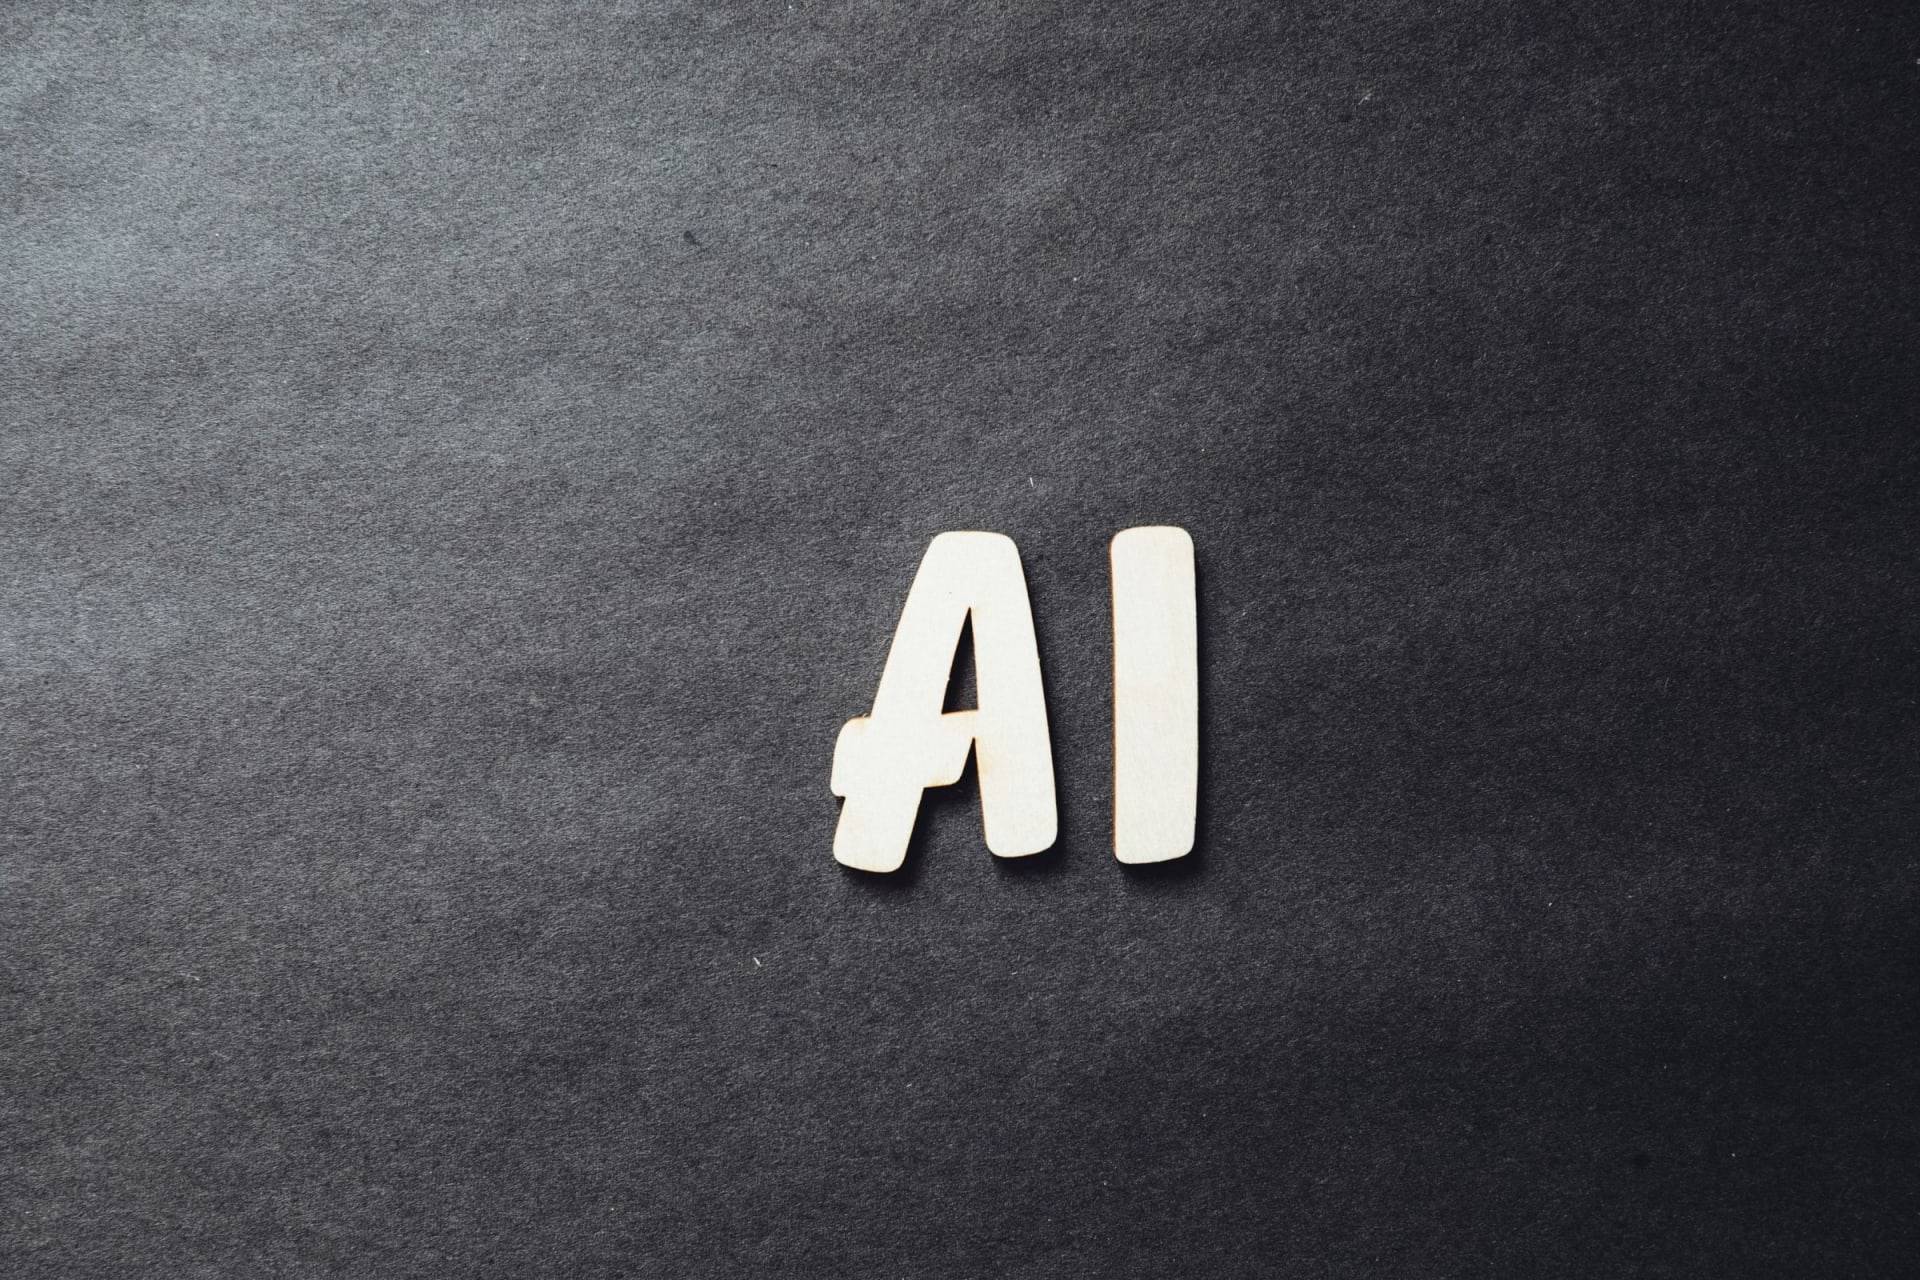 Ai - artificial intellignece